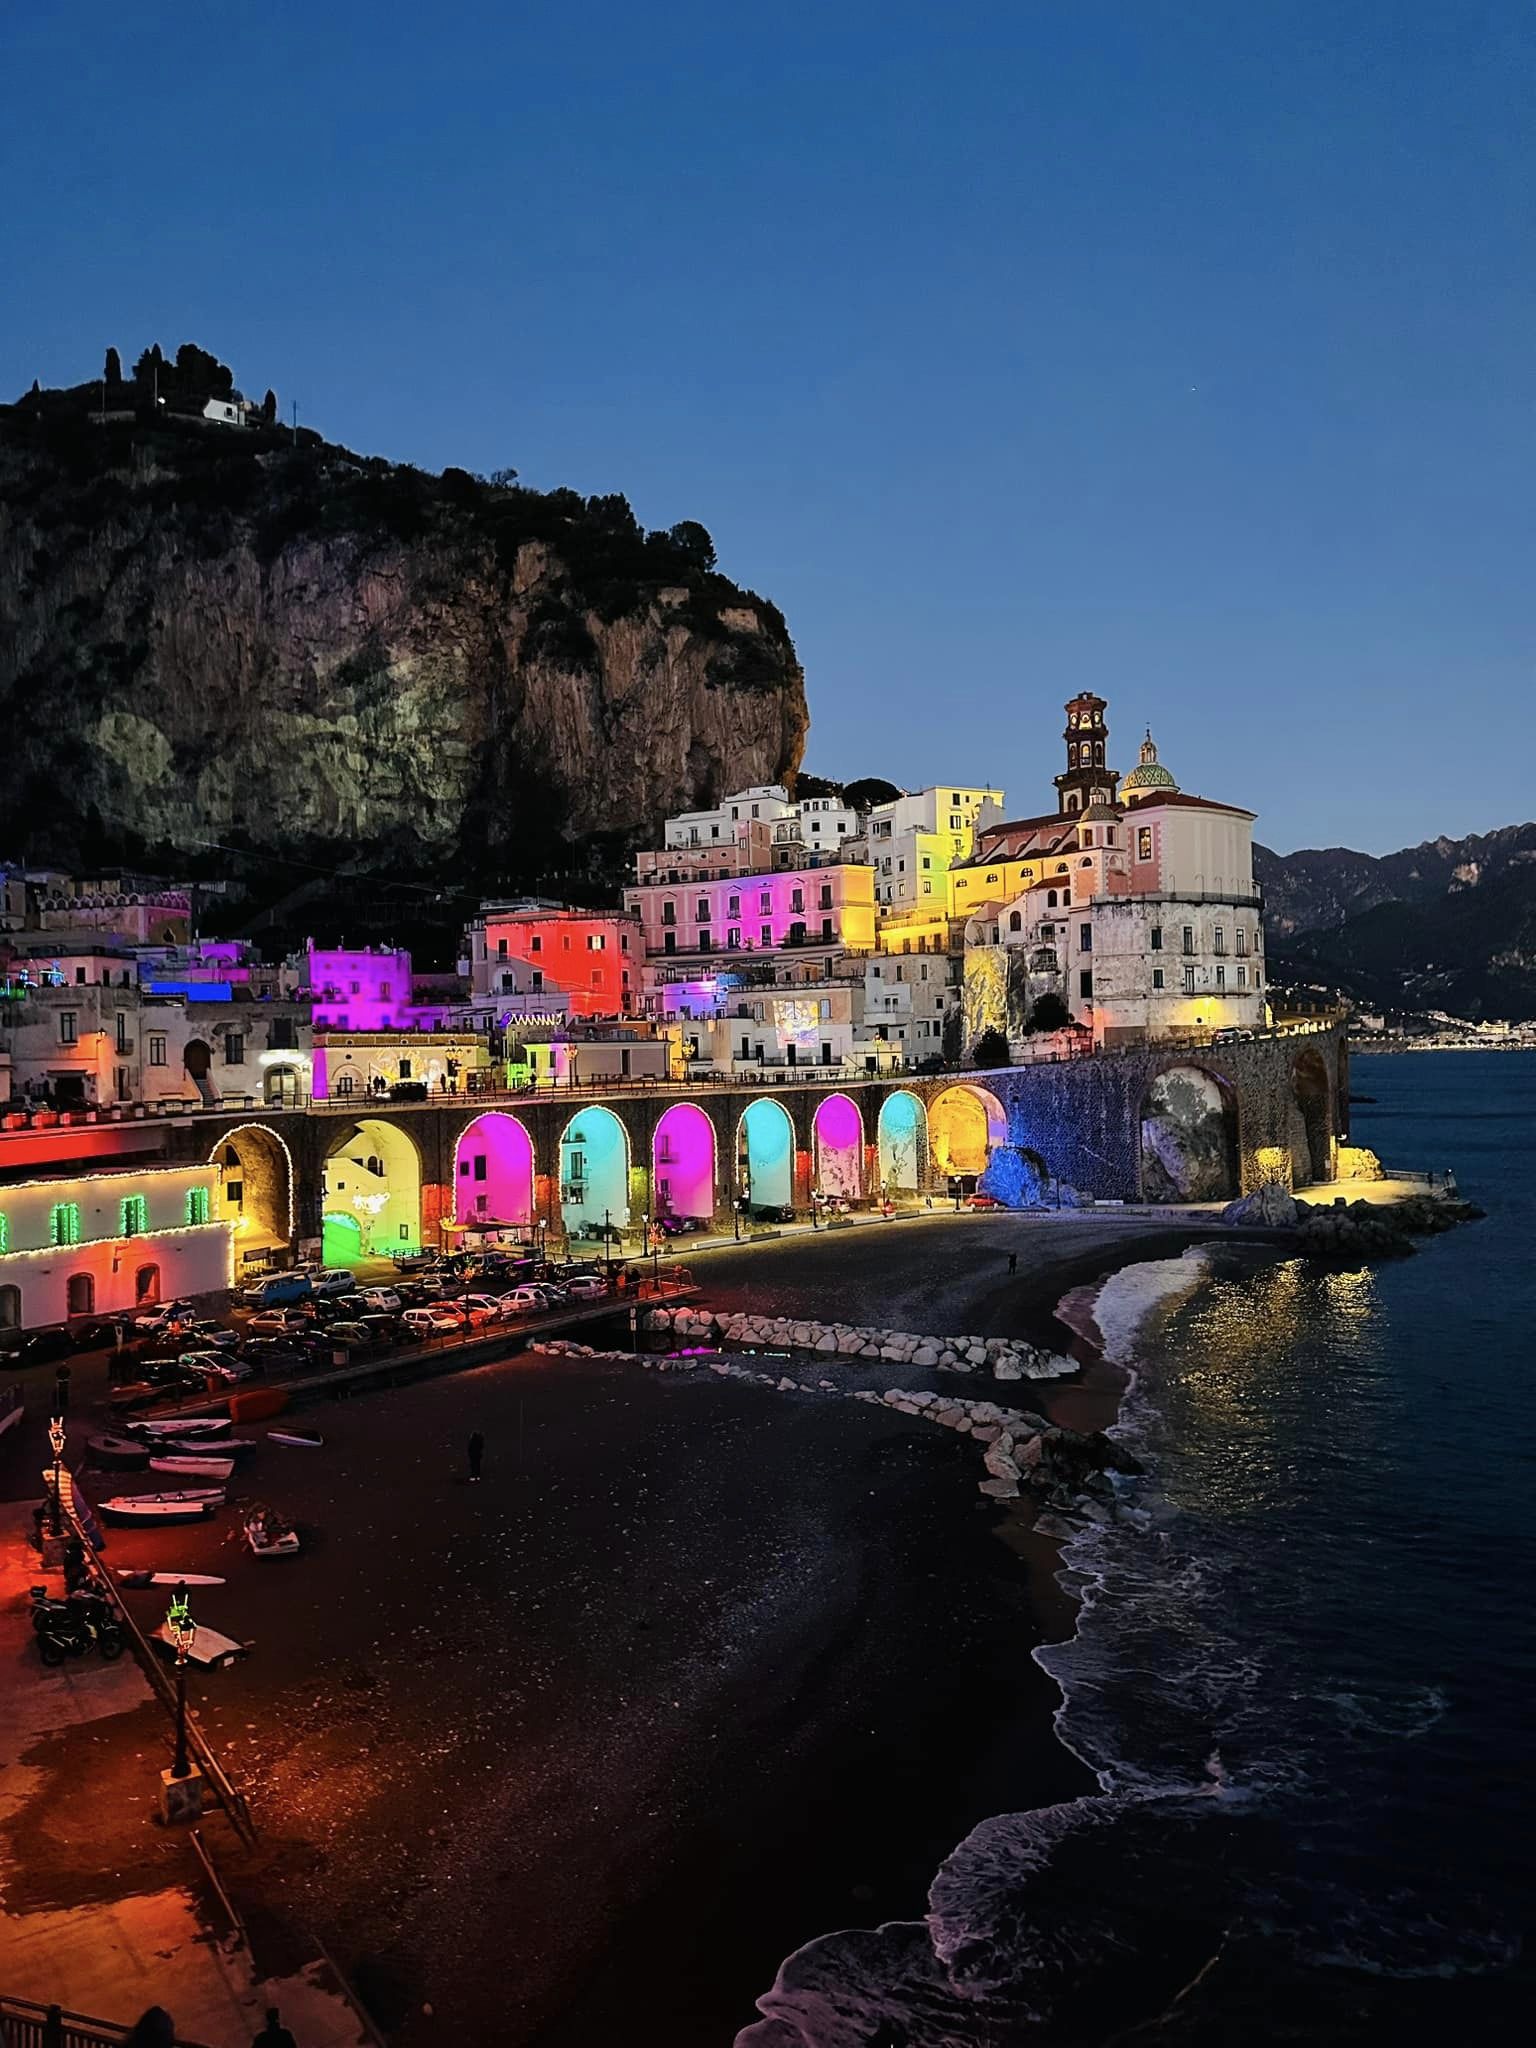 La Costiera Amalfitana e le sue luminarie